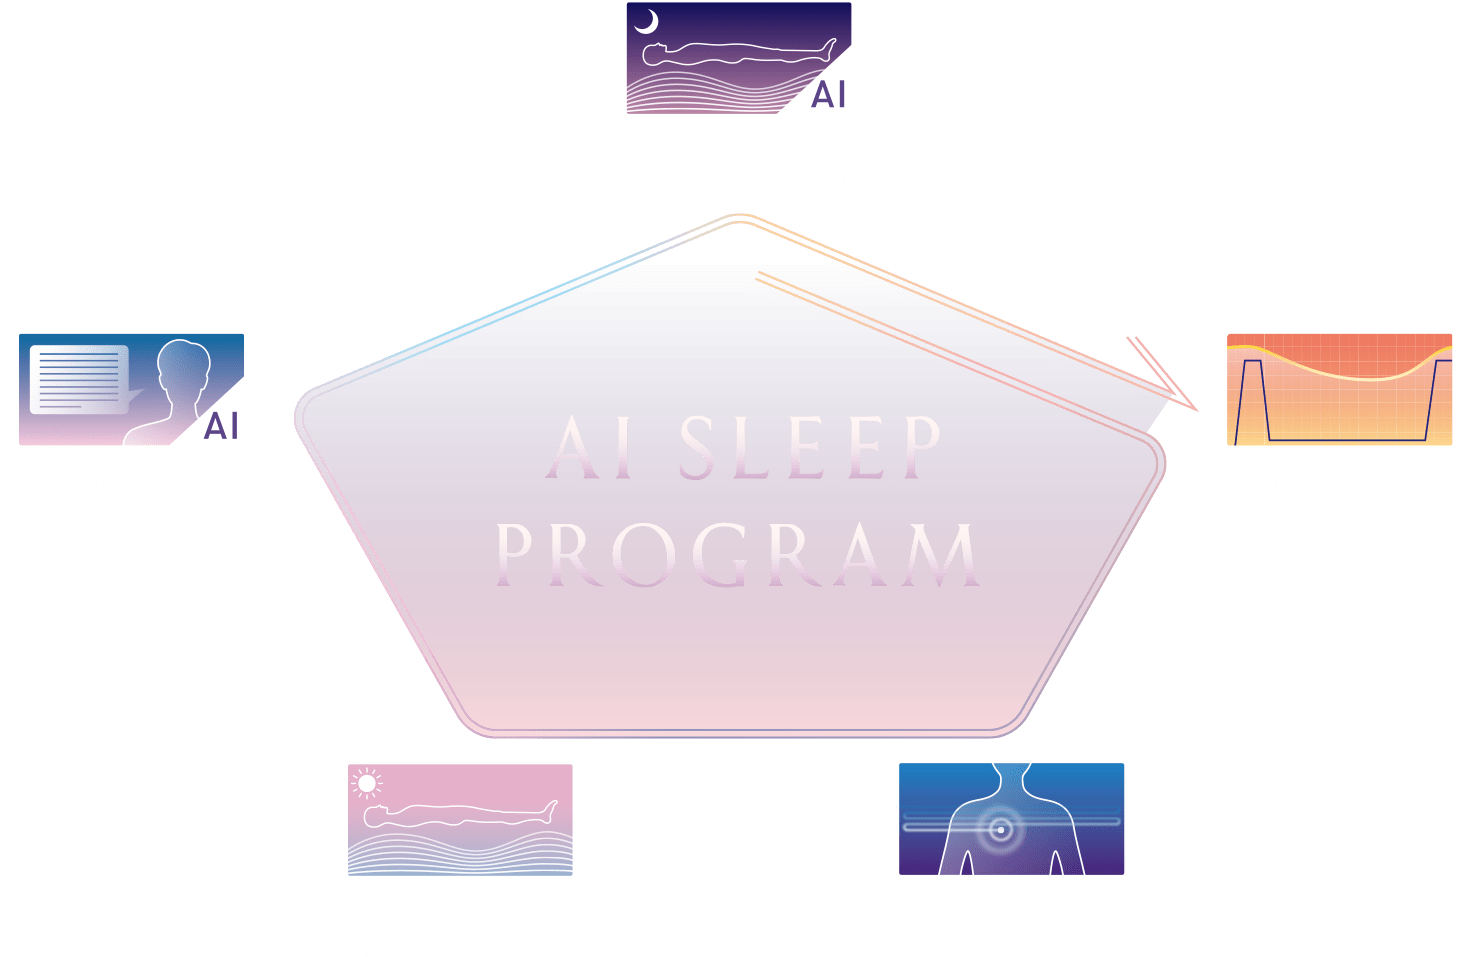 AI SLEEP PROGRAM